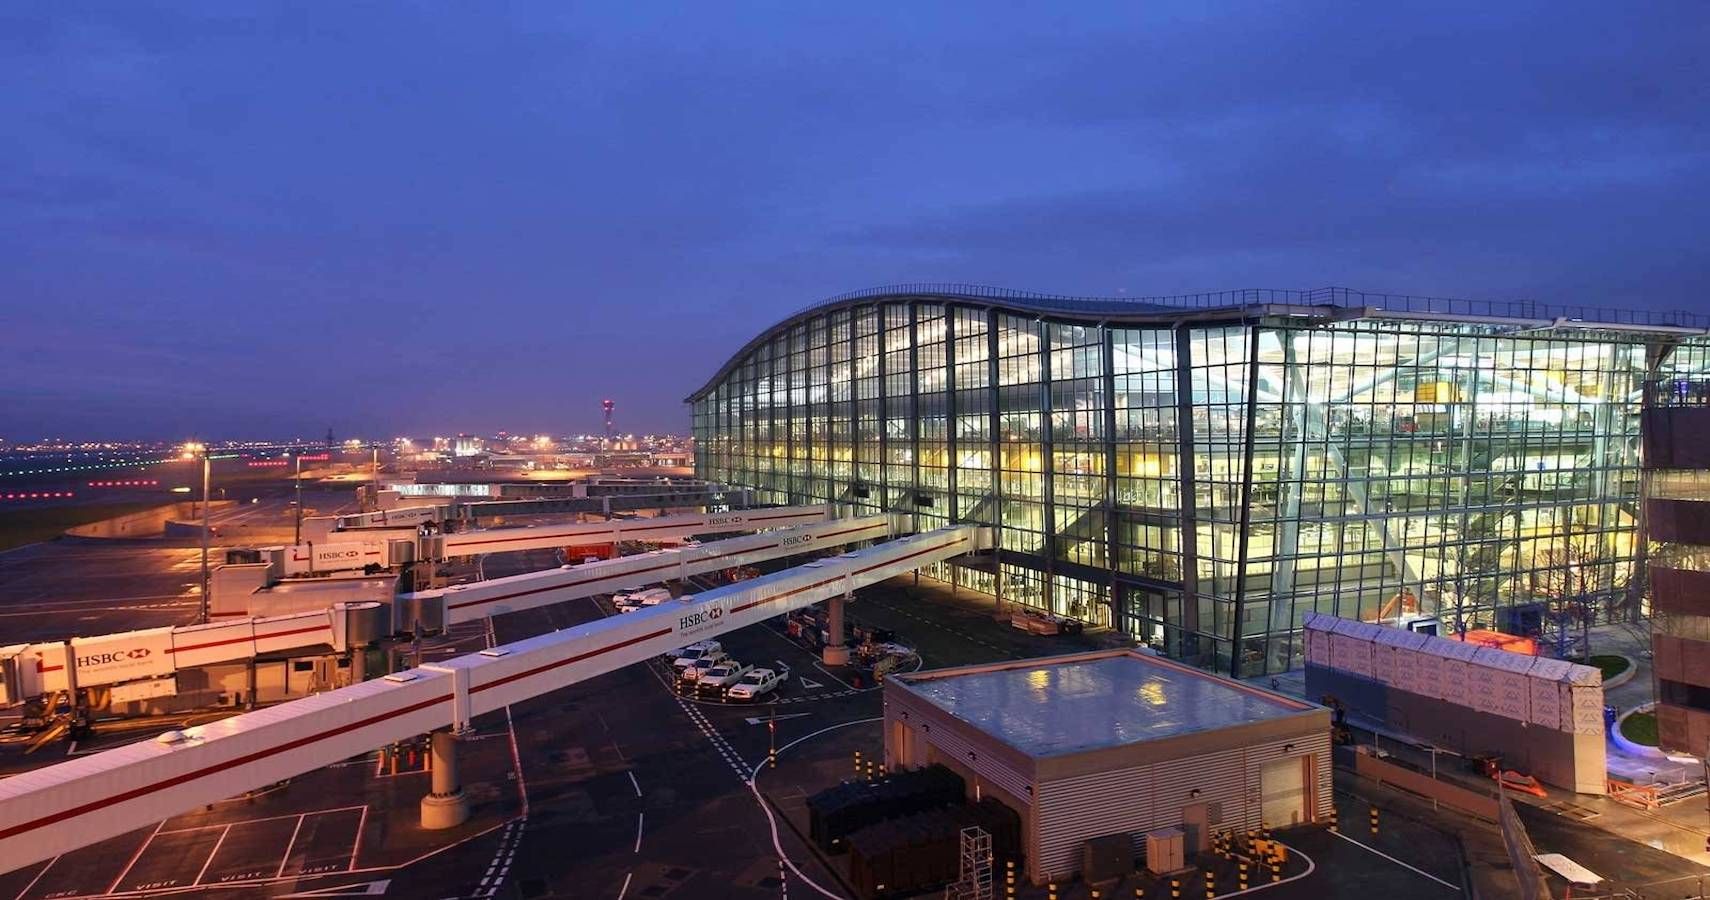 Heathrow May Soon The World's Biggest Airport TheTravel